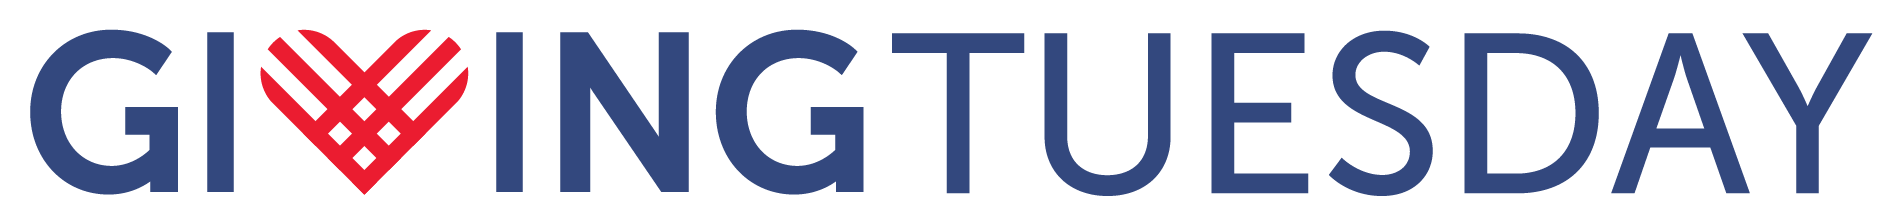 giving-tuesday-logo-color-horizontal